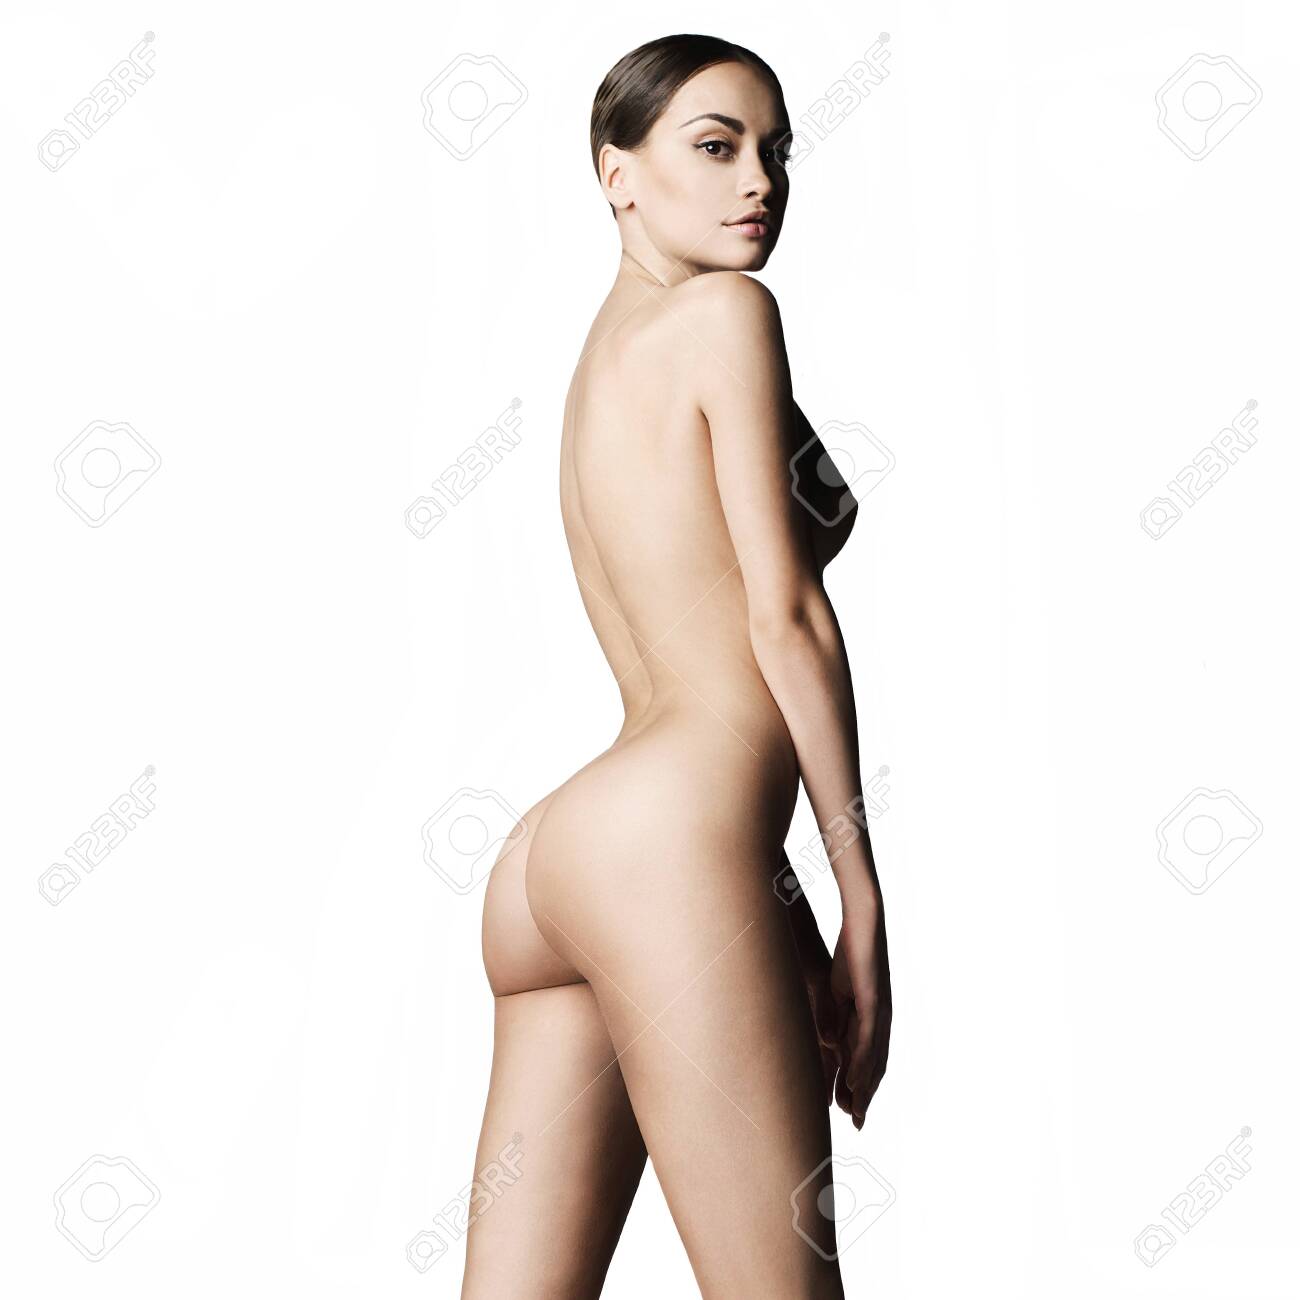 buhle sibisi add sexy naked poses photo